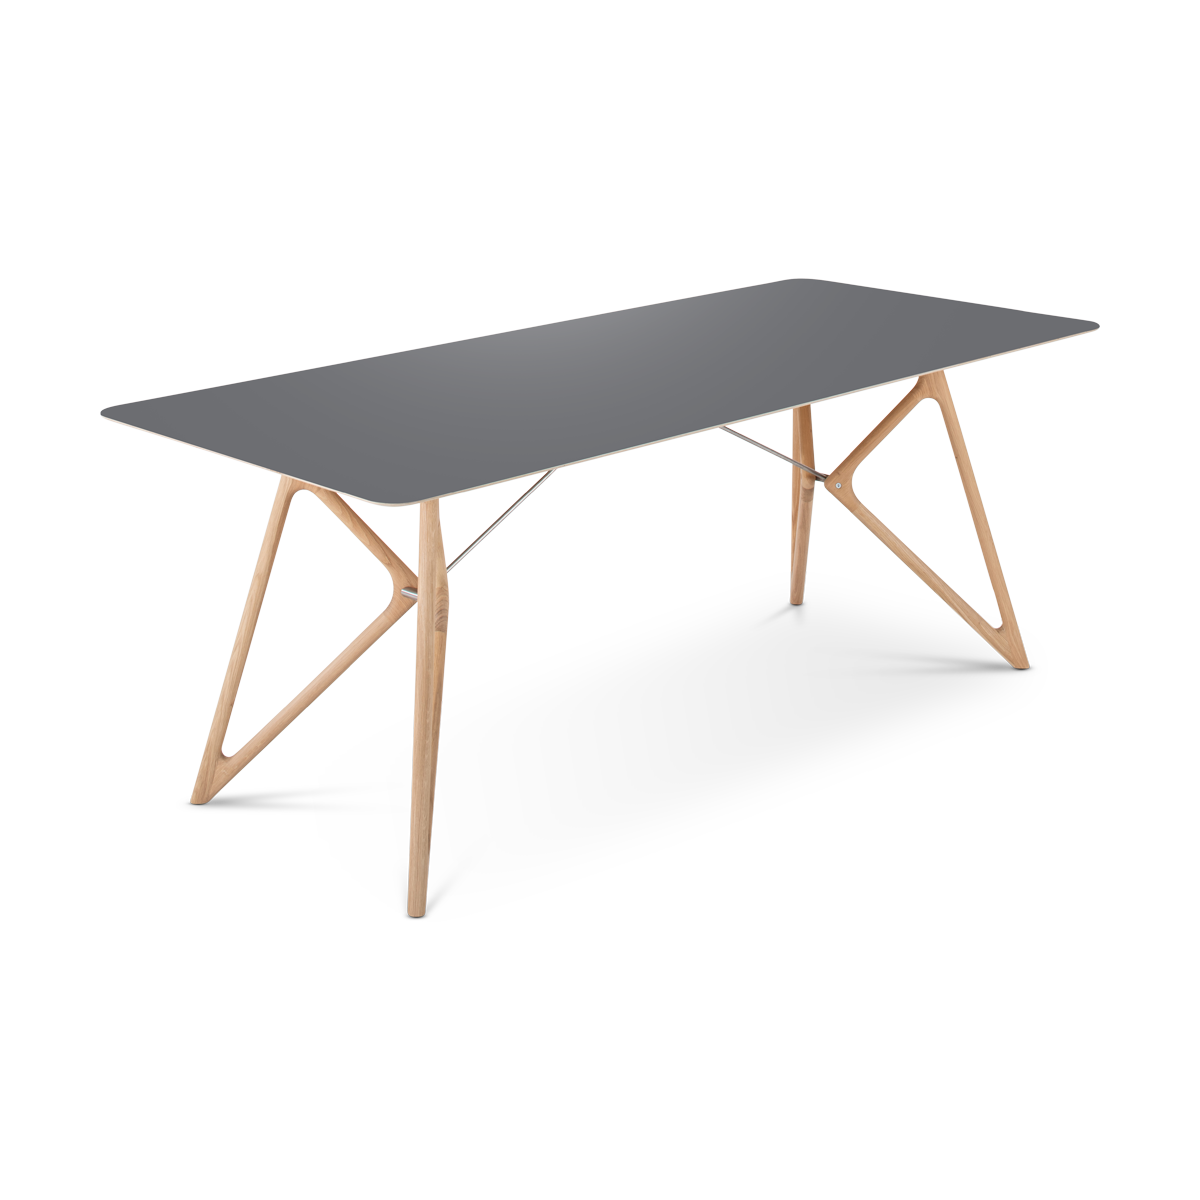 Tink table houten eettafel whitewash - met linoleum tafelblad nero - 200 x 90 cm